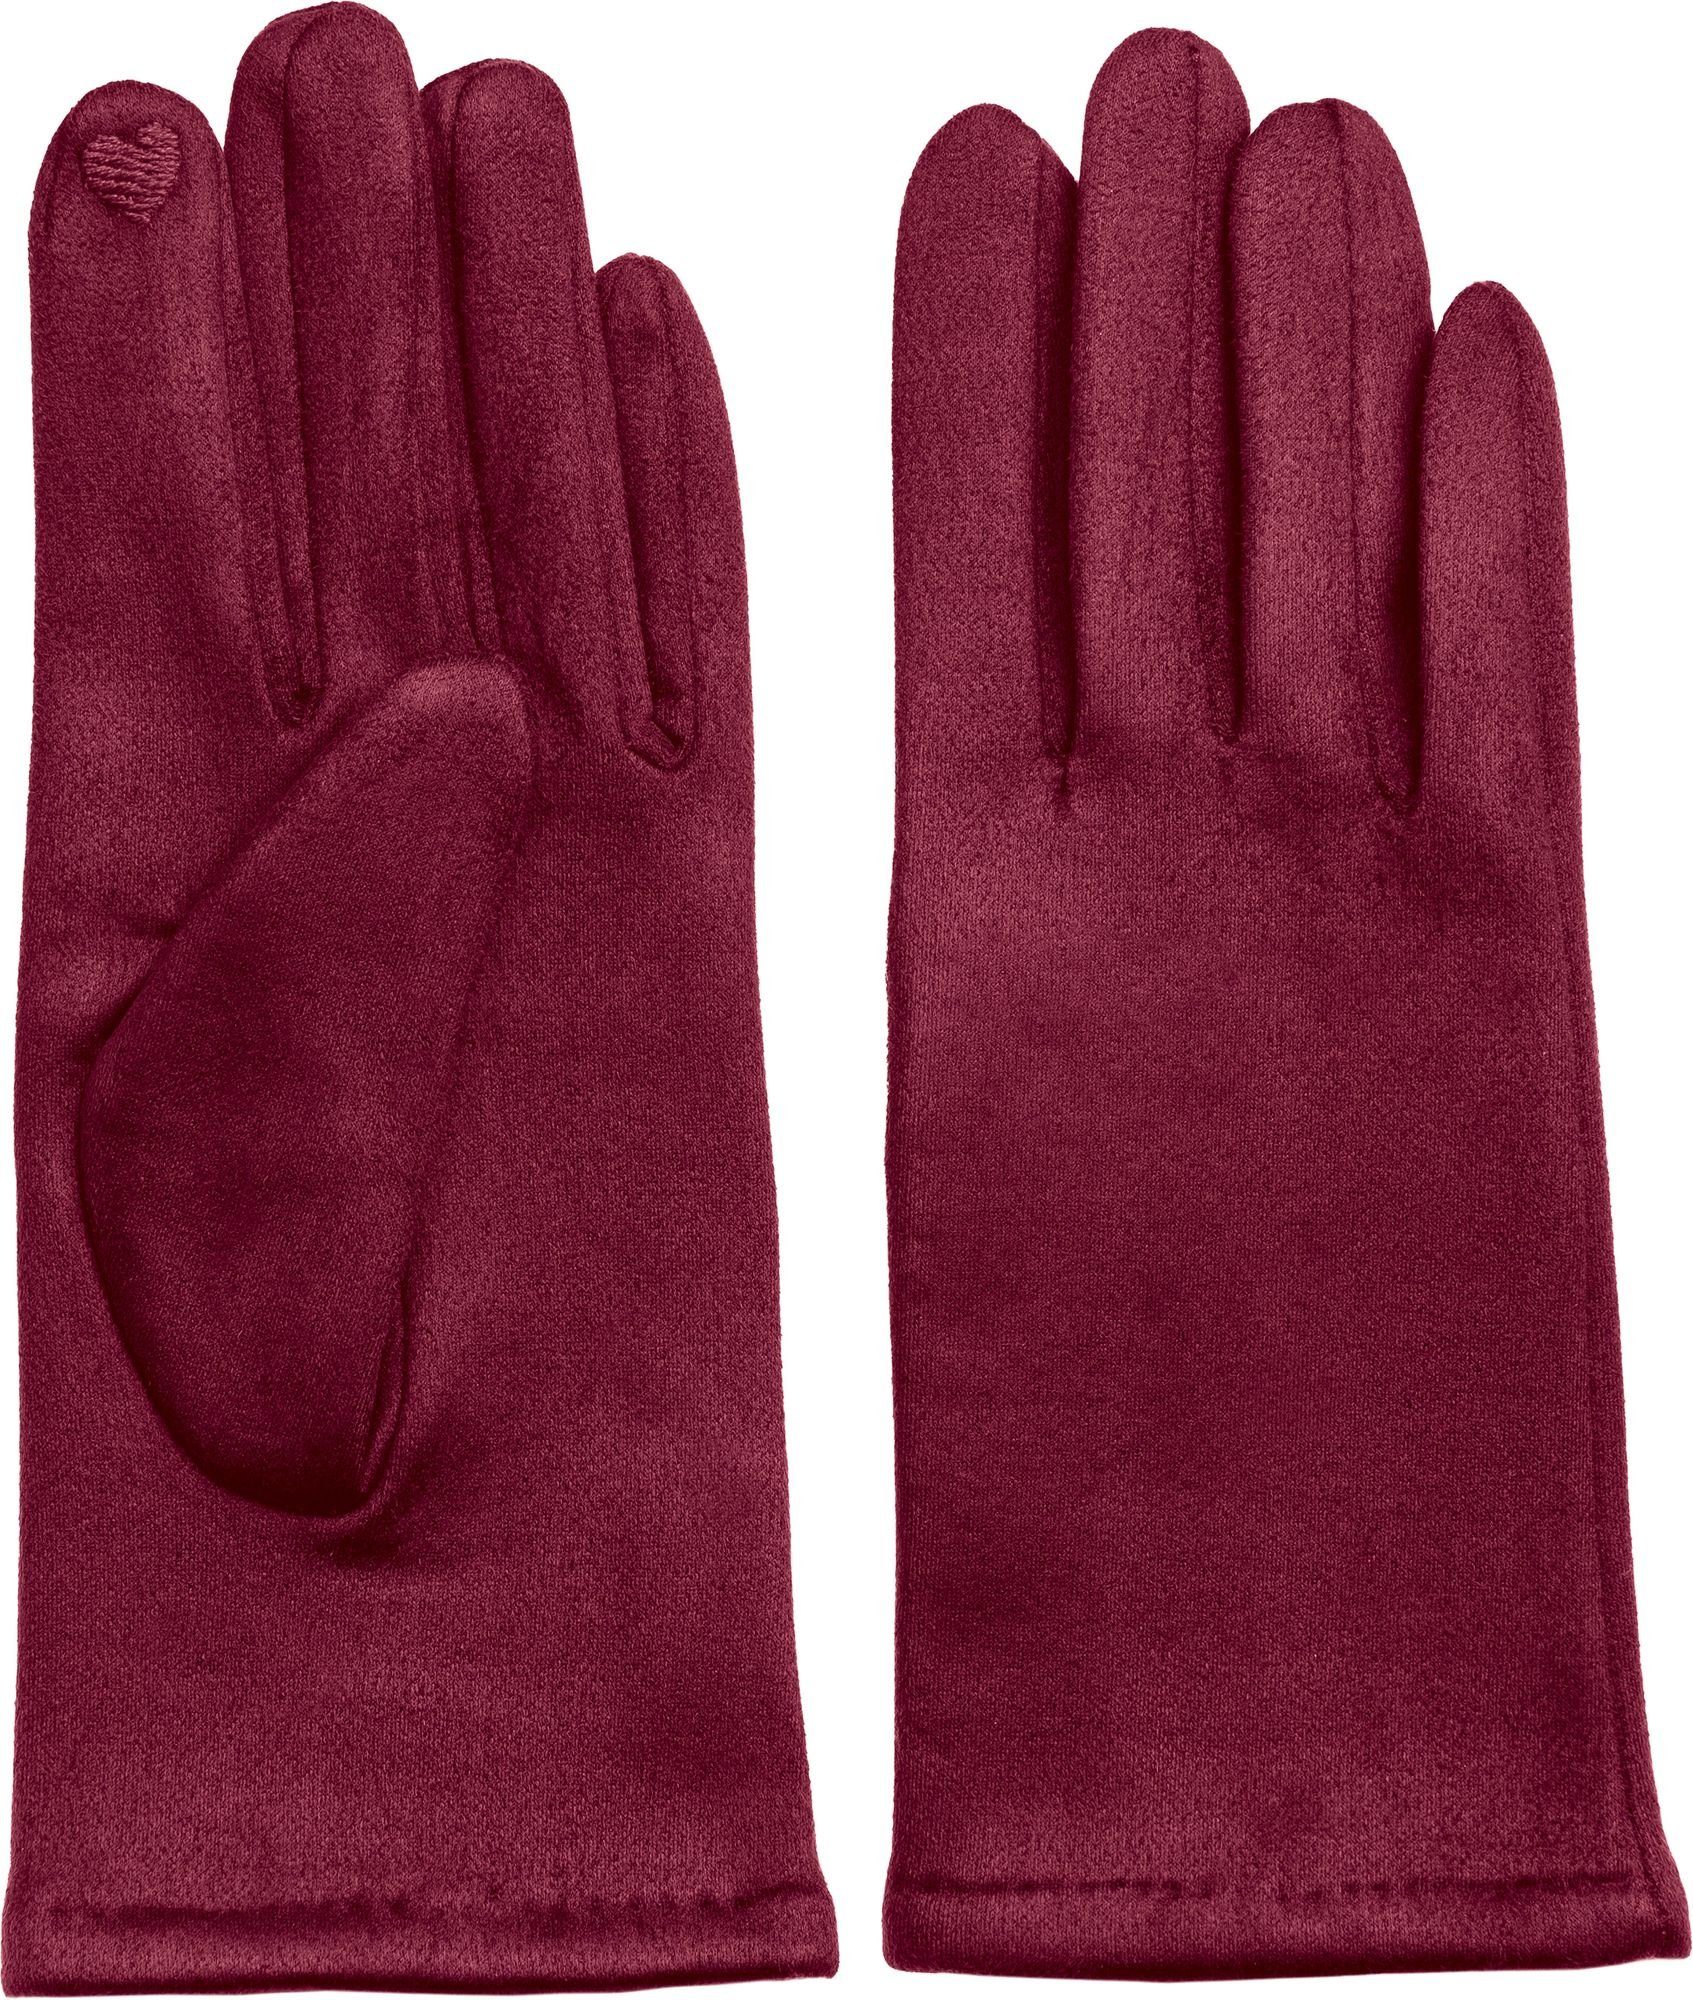 Strickhandschuhe Winter elegante uni Caspar klassisch weinrot GLV013 Handschuhe Damen